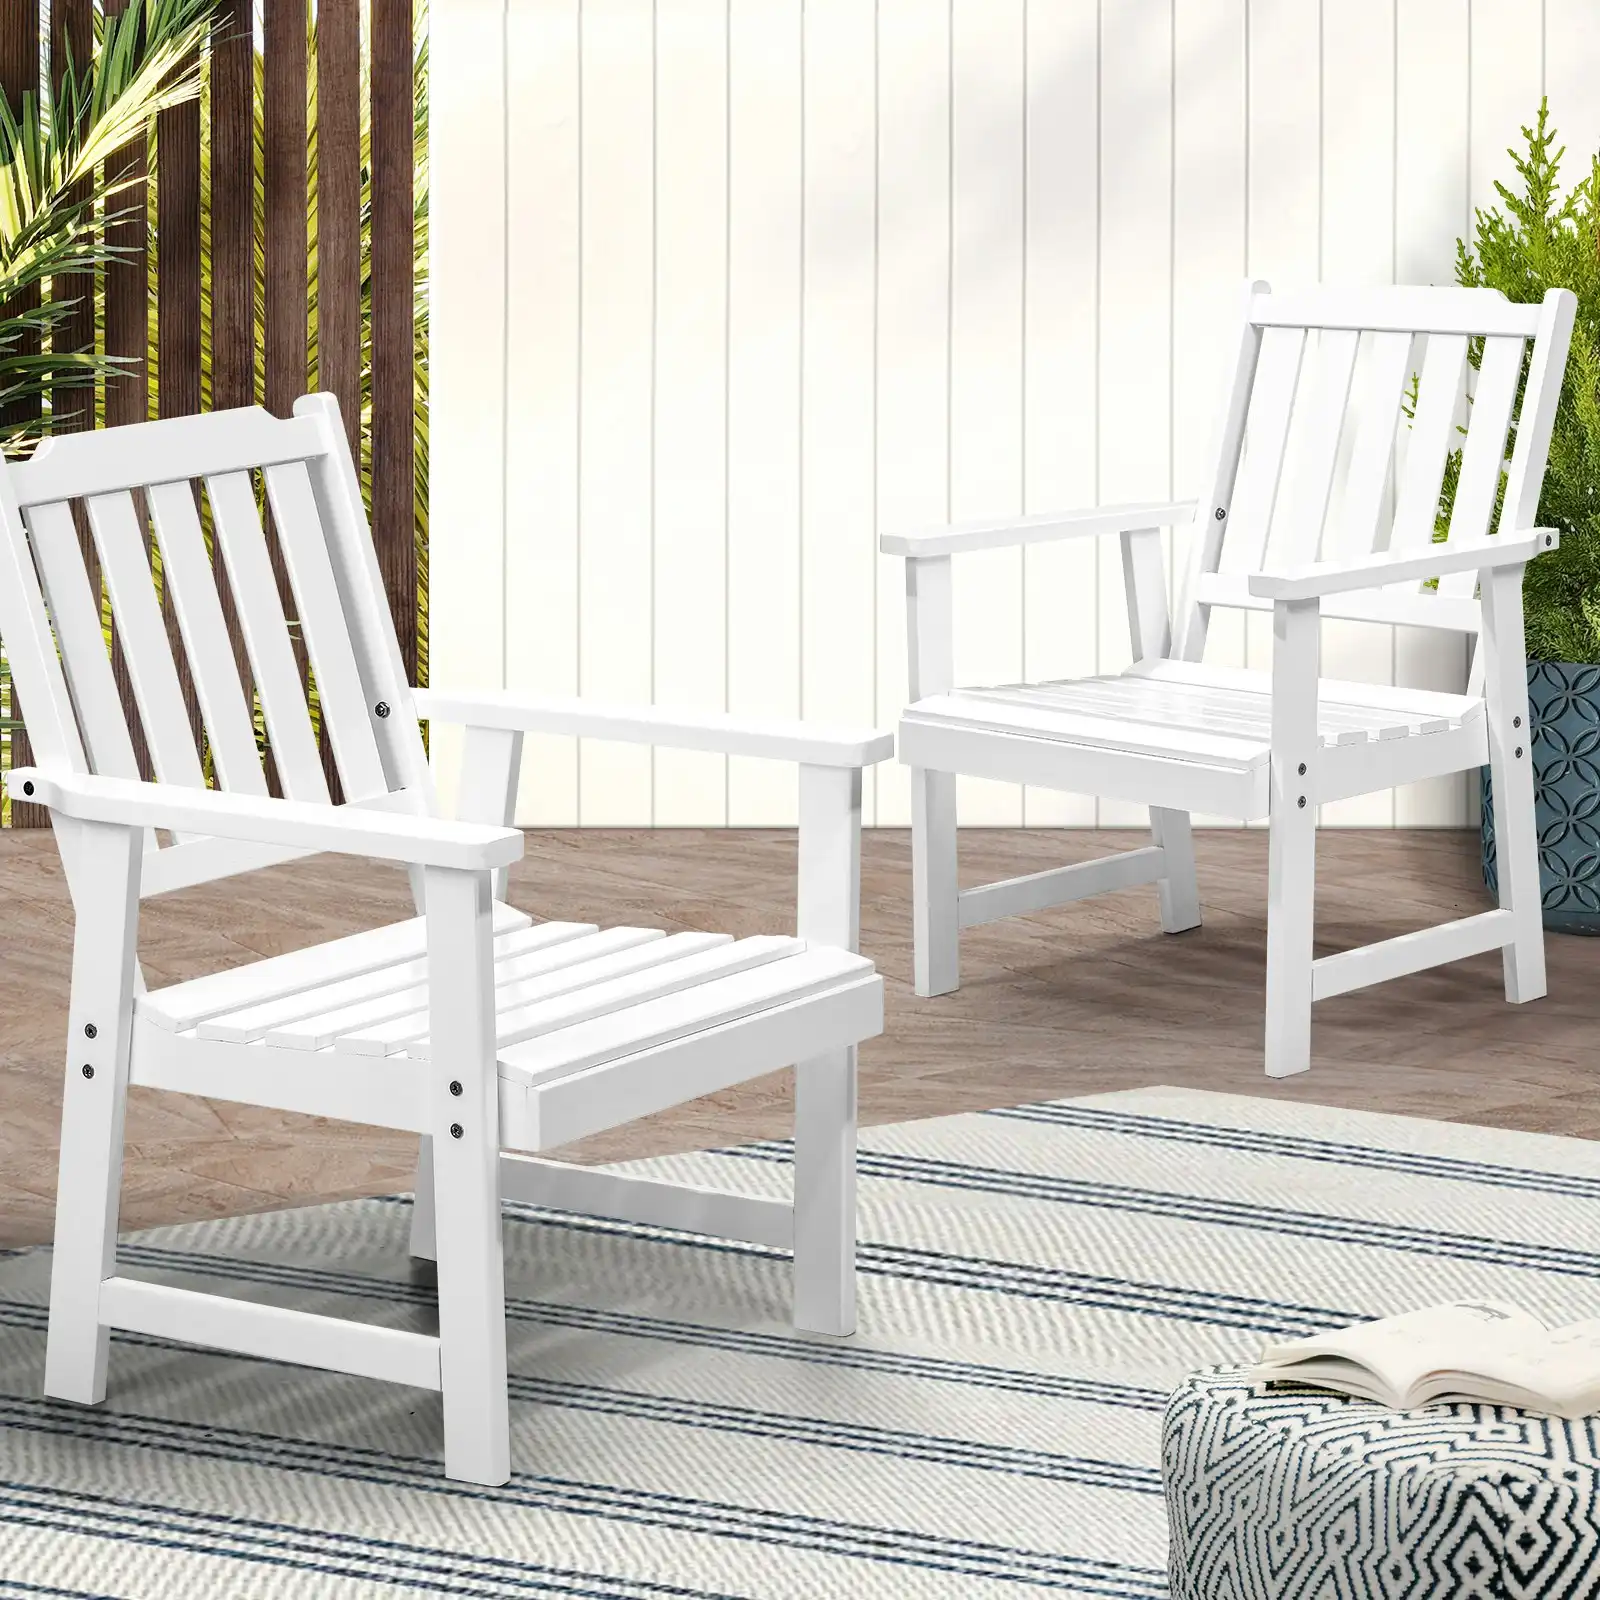 Livsip Outdoor Armchair Wooden Patio Furniture 2PCS Chairs Set Garden Seat White